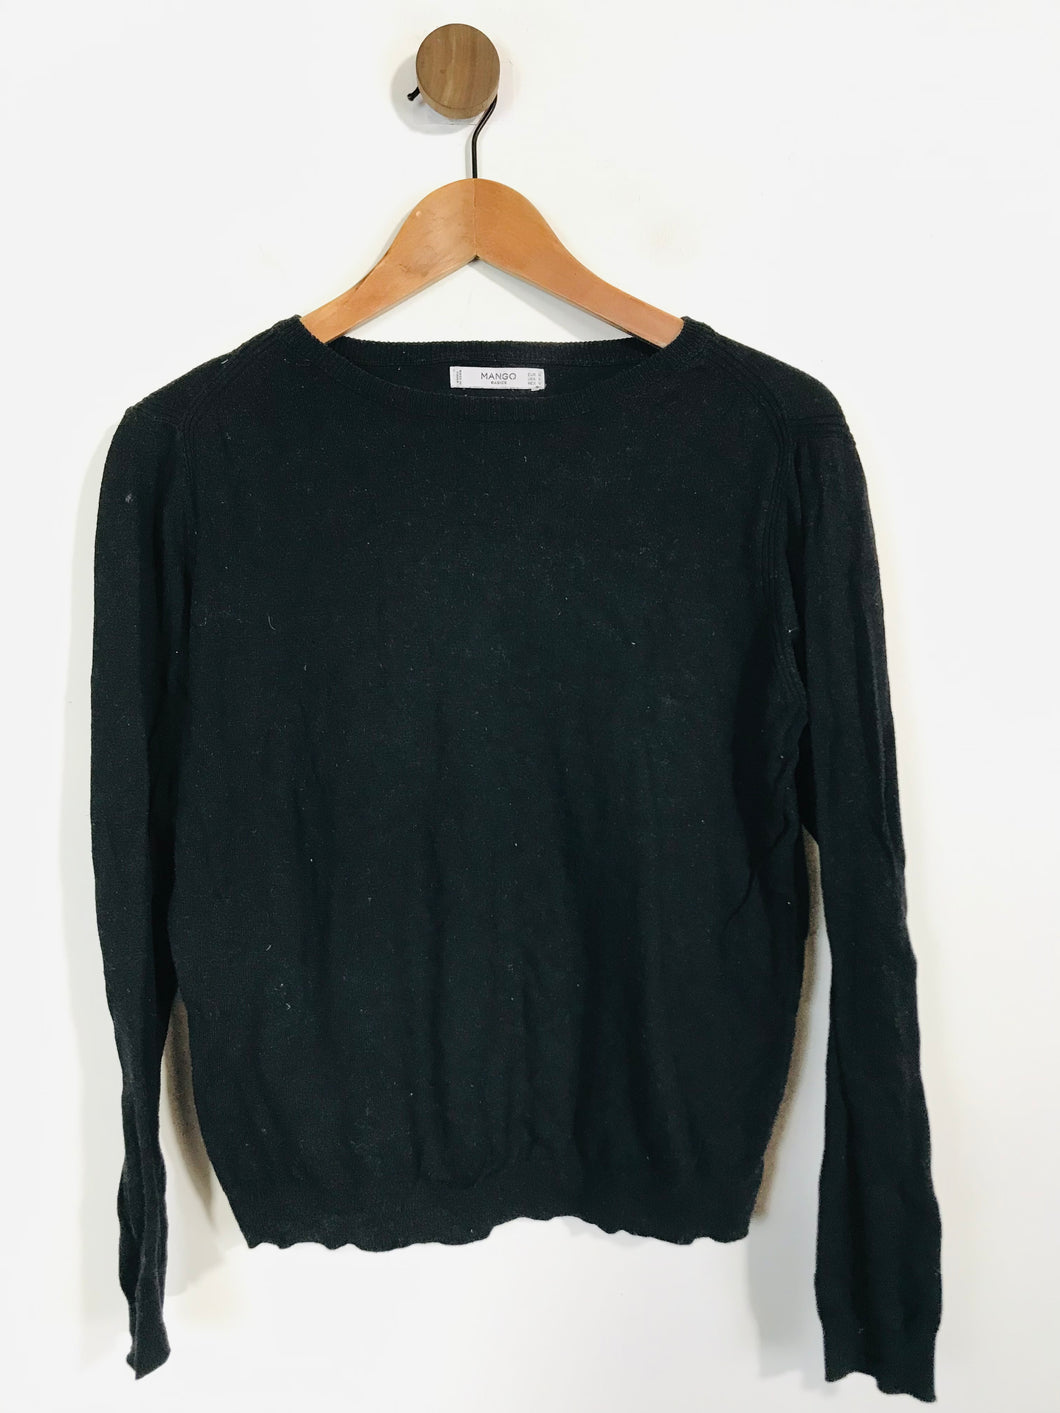 Mango Women's Cotton Knit T-Shirt | M UK10-12 | Black